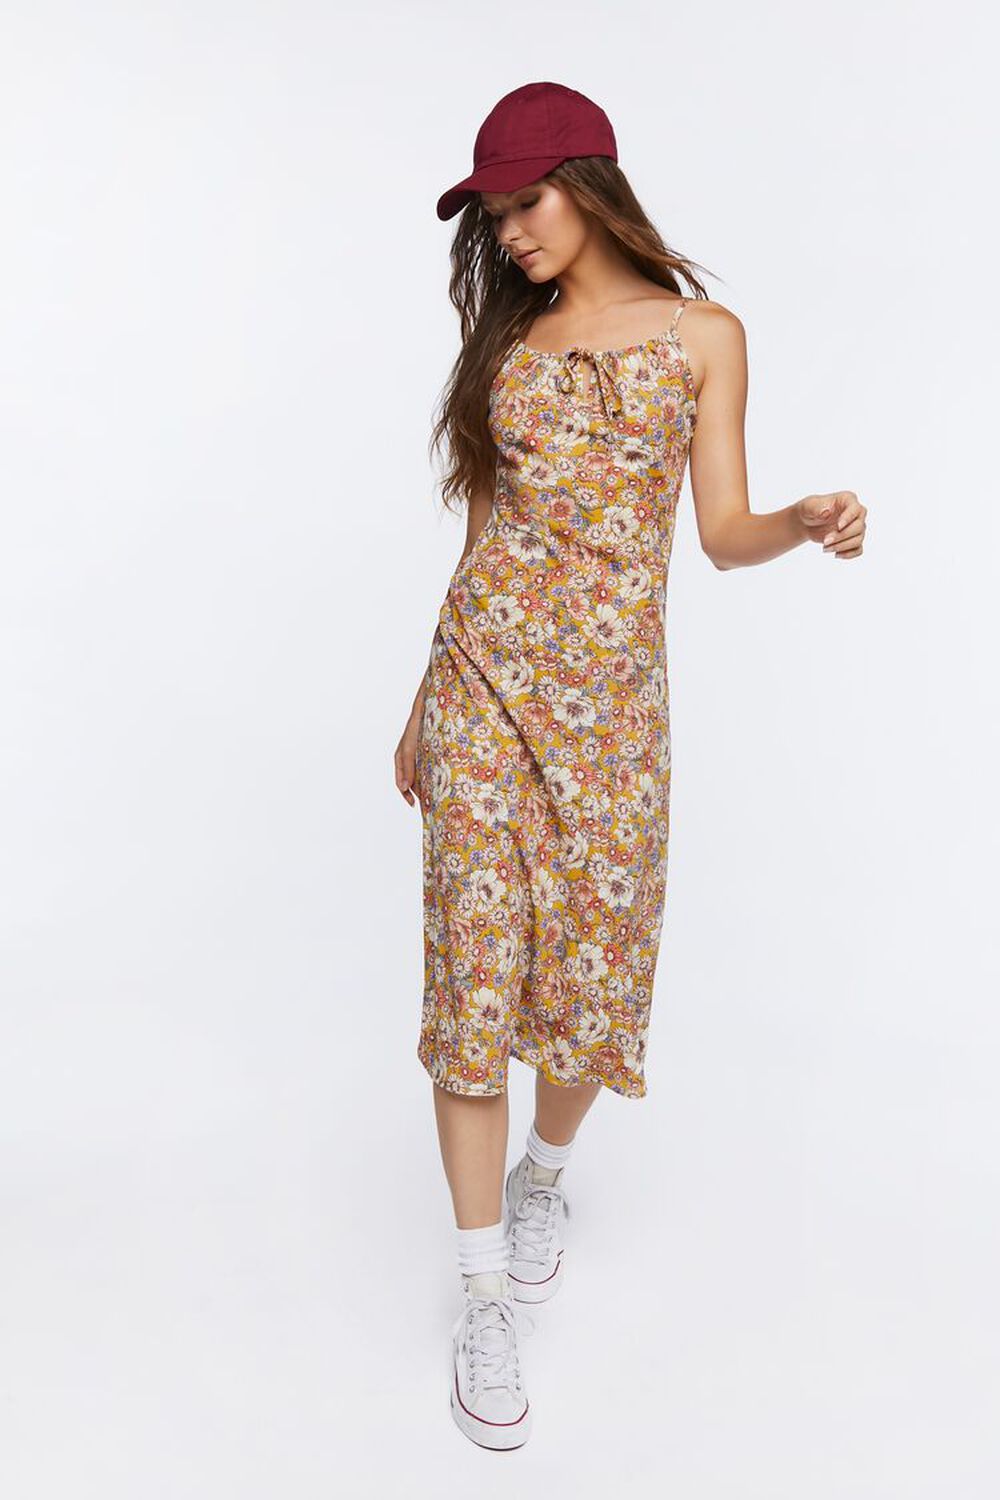 YELLOW/MULTI Floral Print Cami Midi Dress, image 1